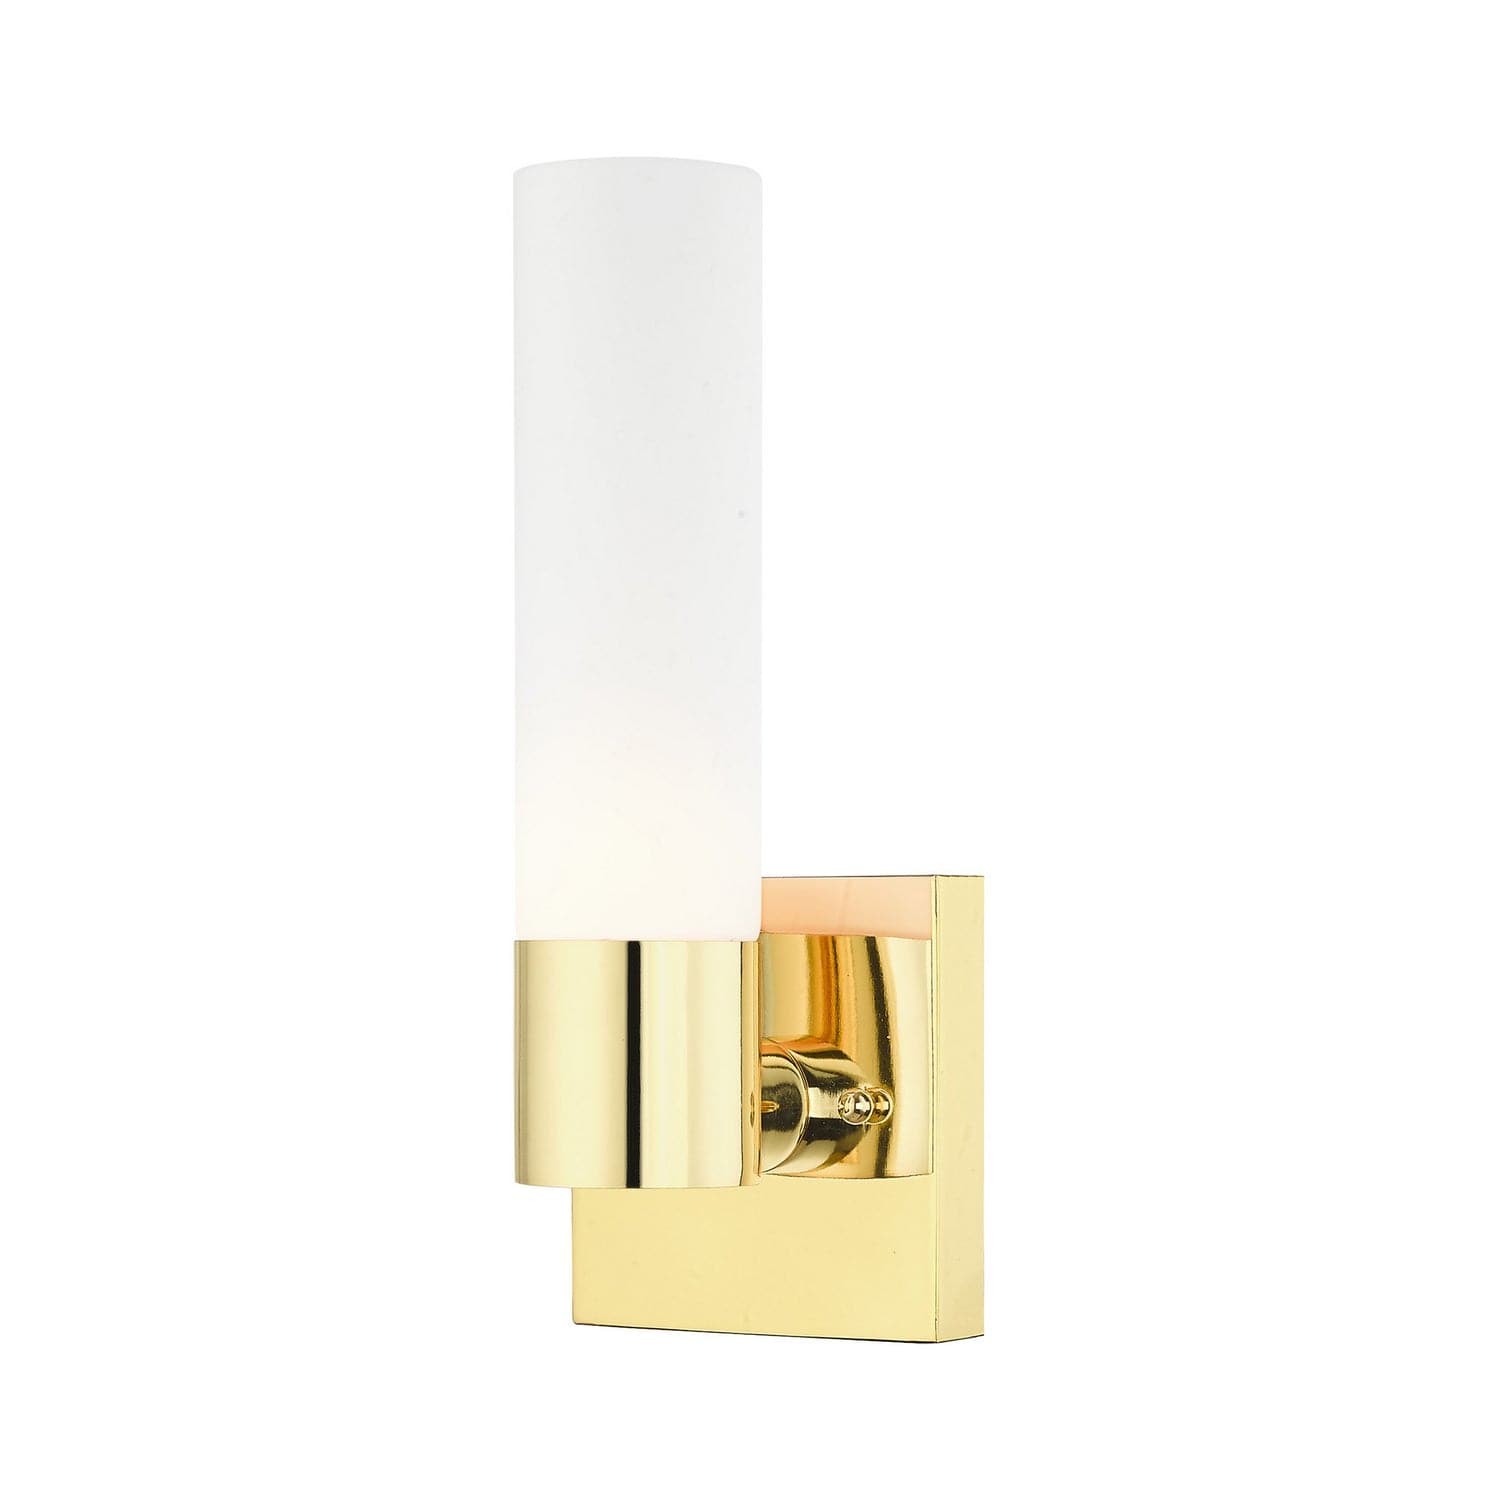 Livex Lighting - 10101-02 - One Light Wall Sconce - Aero - Polished Brass